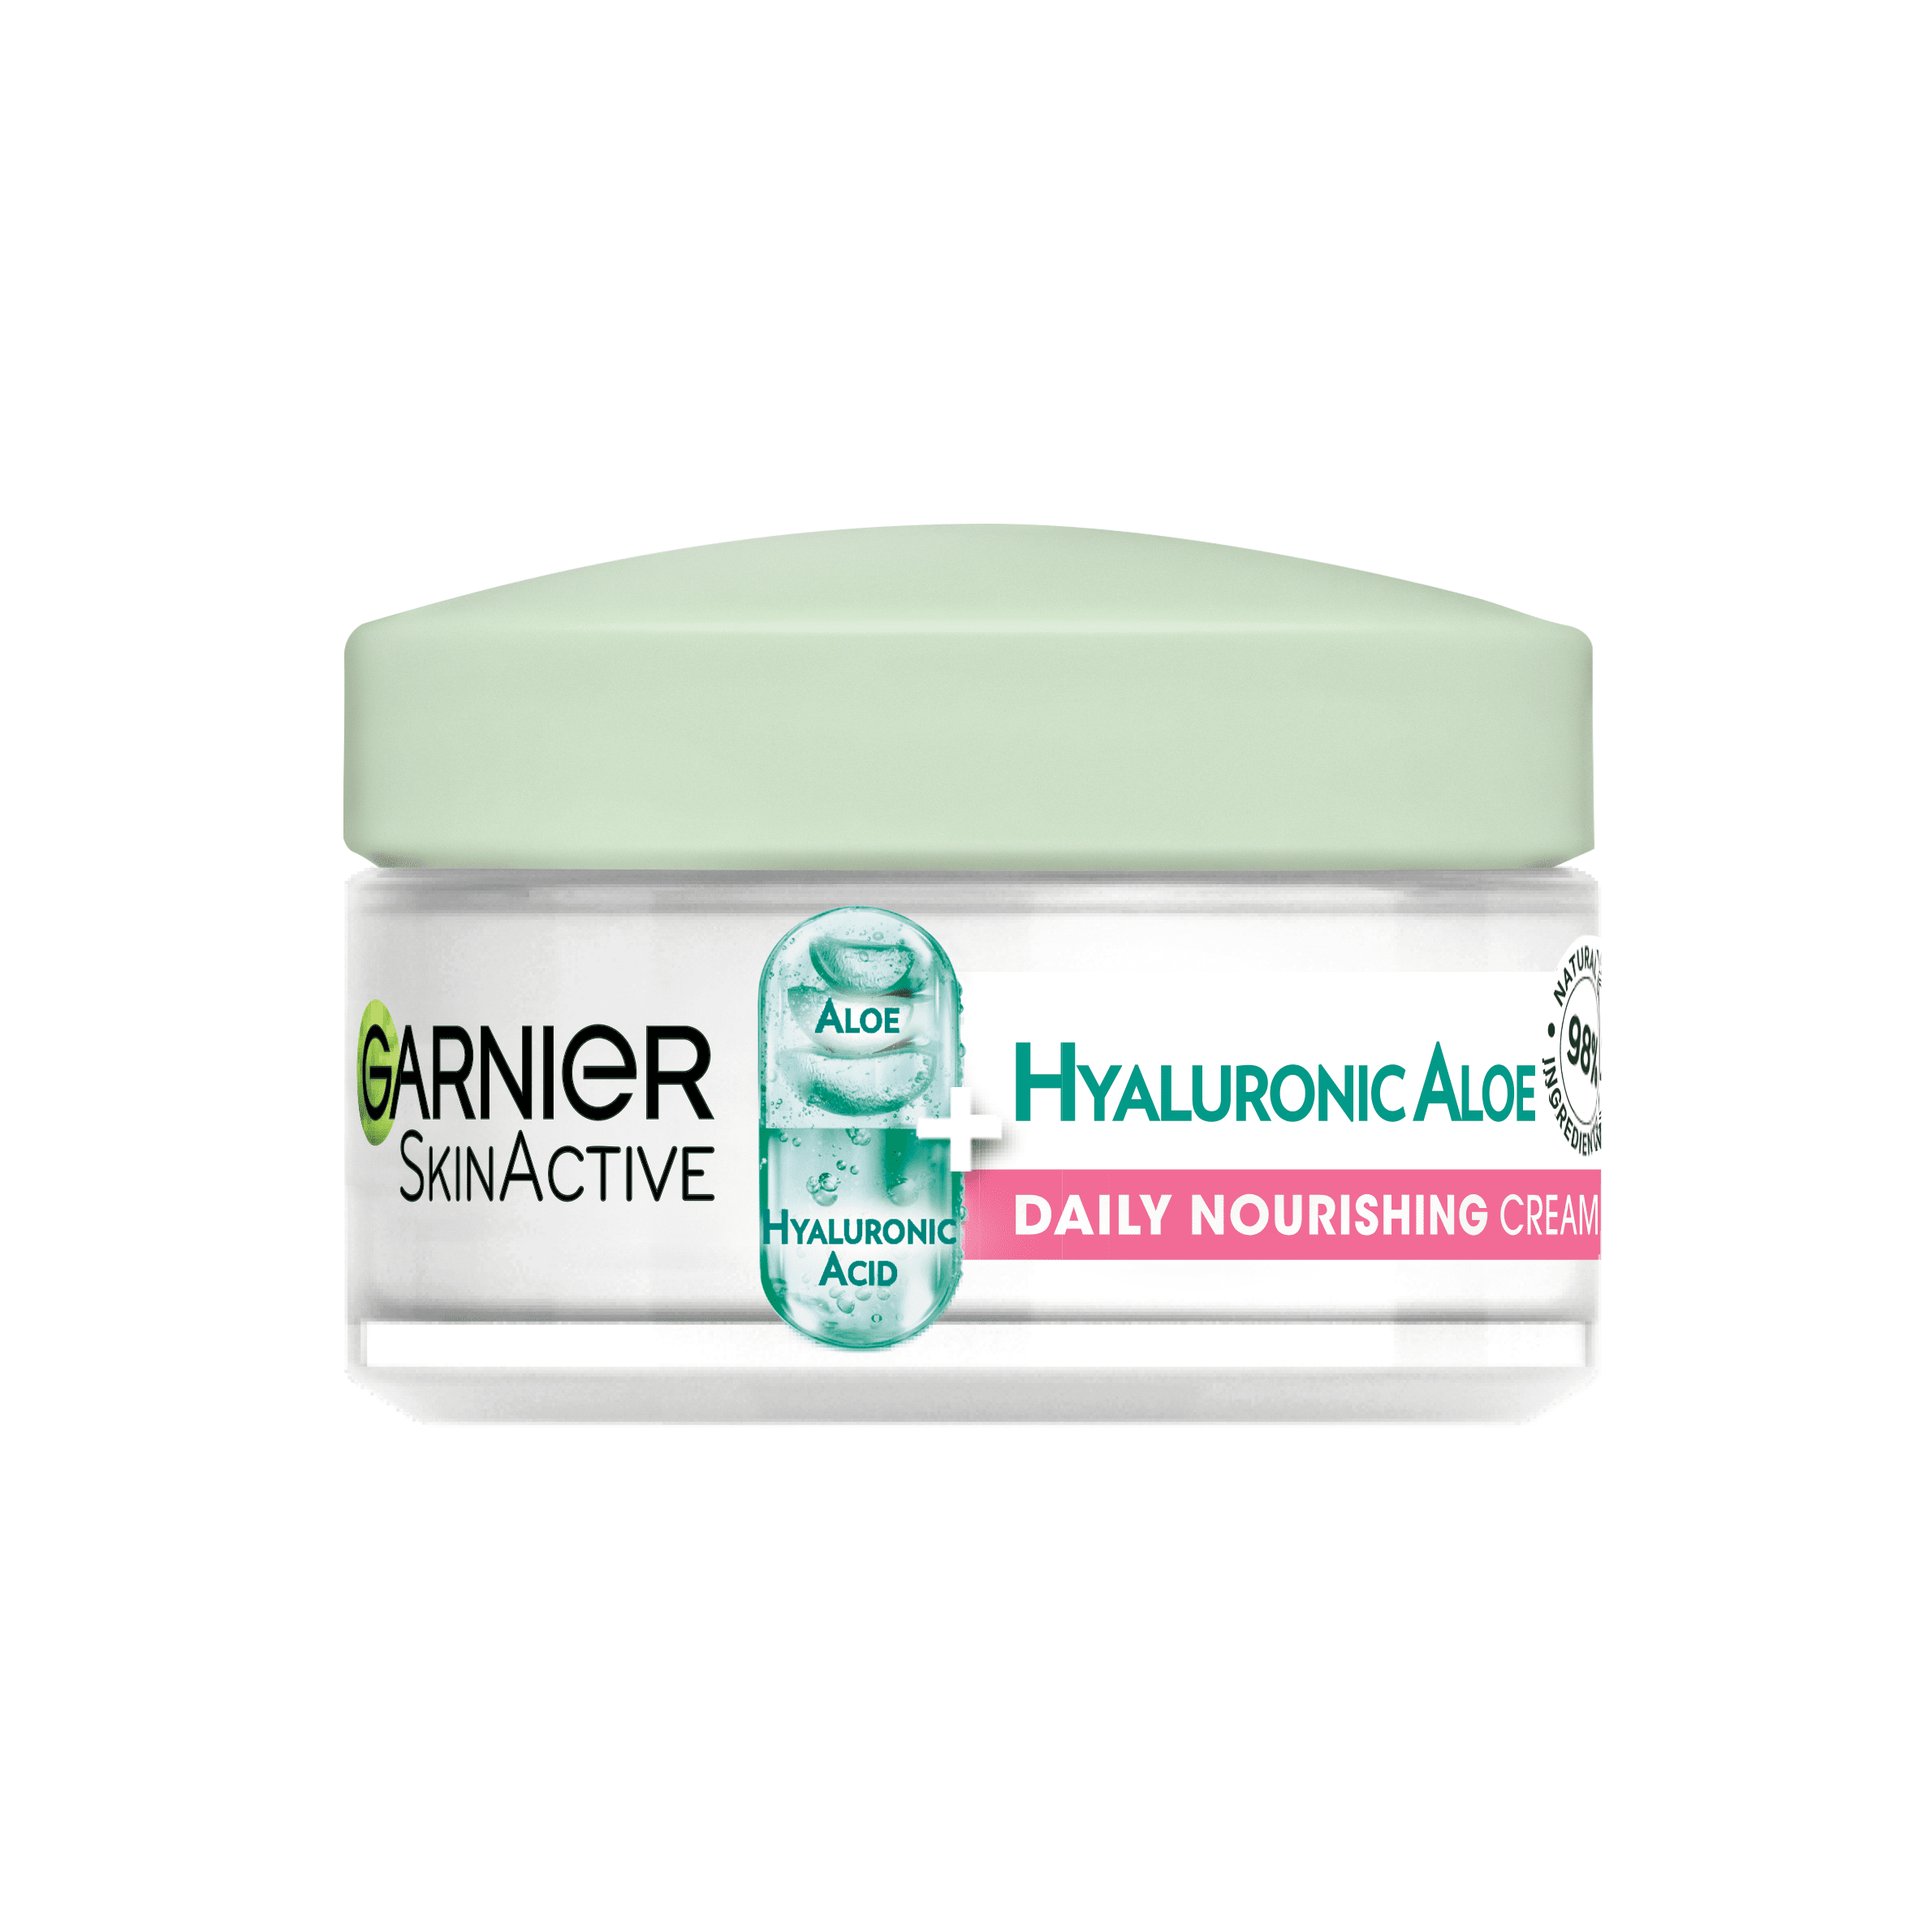 Garnier Skin Active Hyaluronic Aloe Daily Nourishing Cream Packshot 2